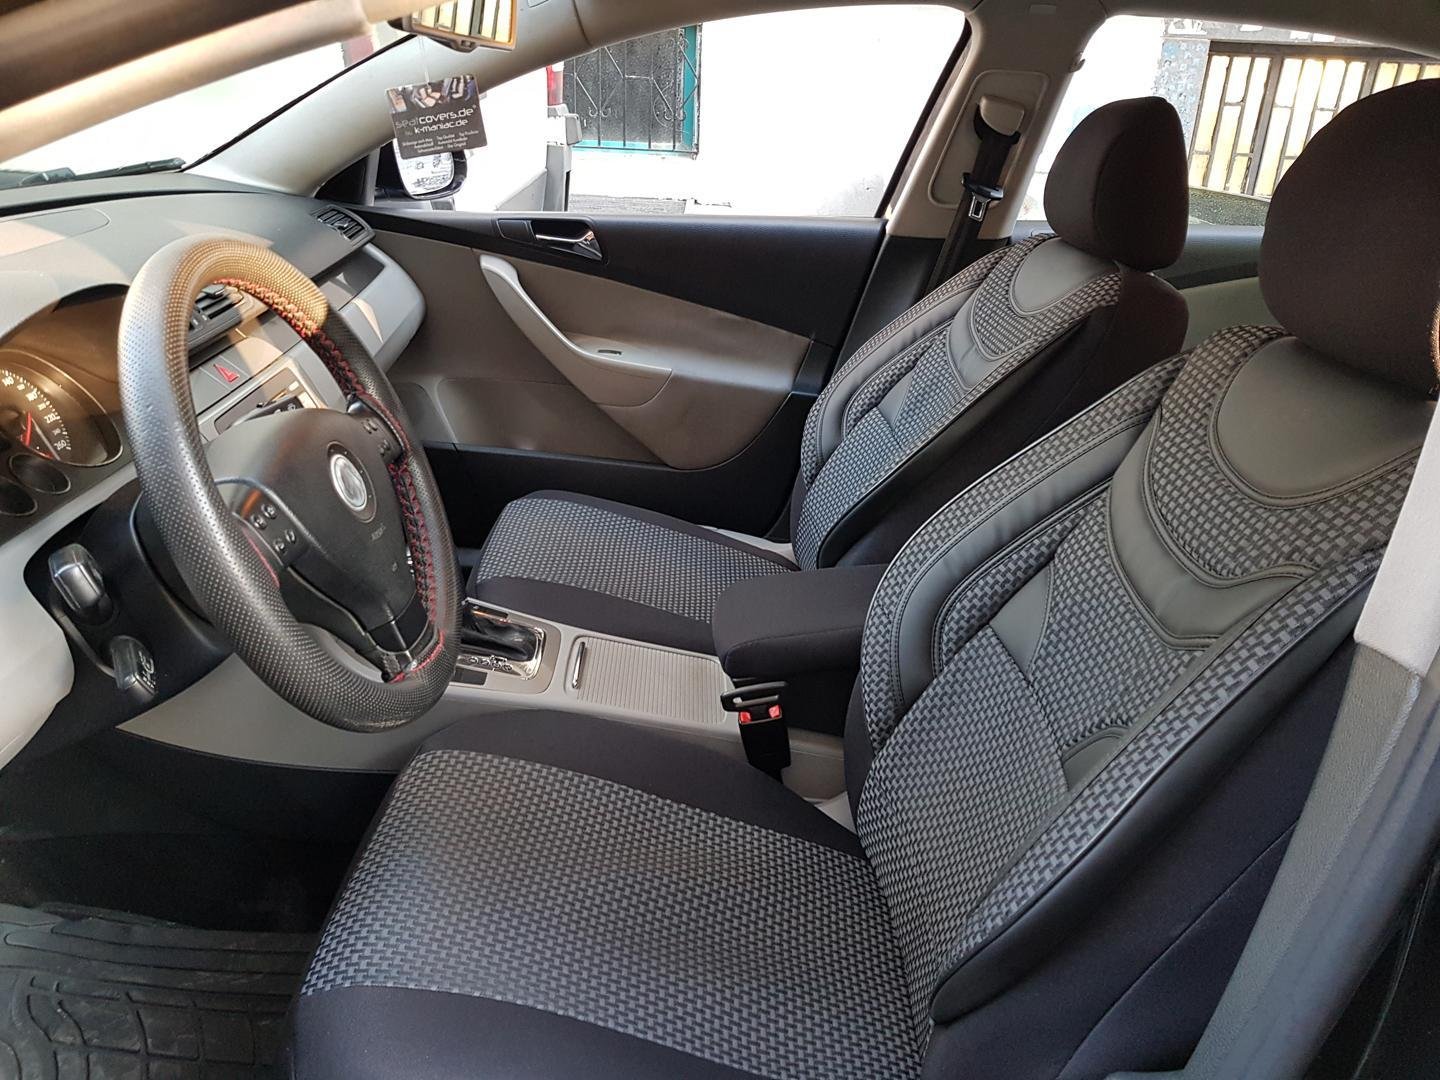 Black/Grey Full Set Front & Rear Car Seat Covers for Suzuki Liana